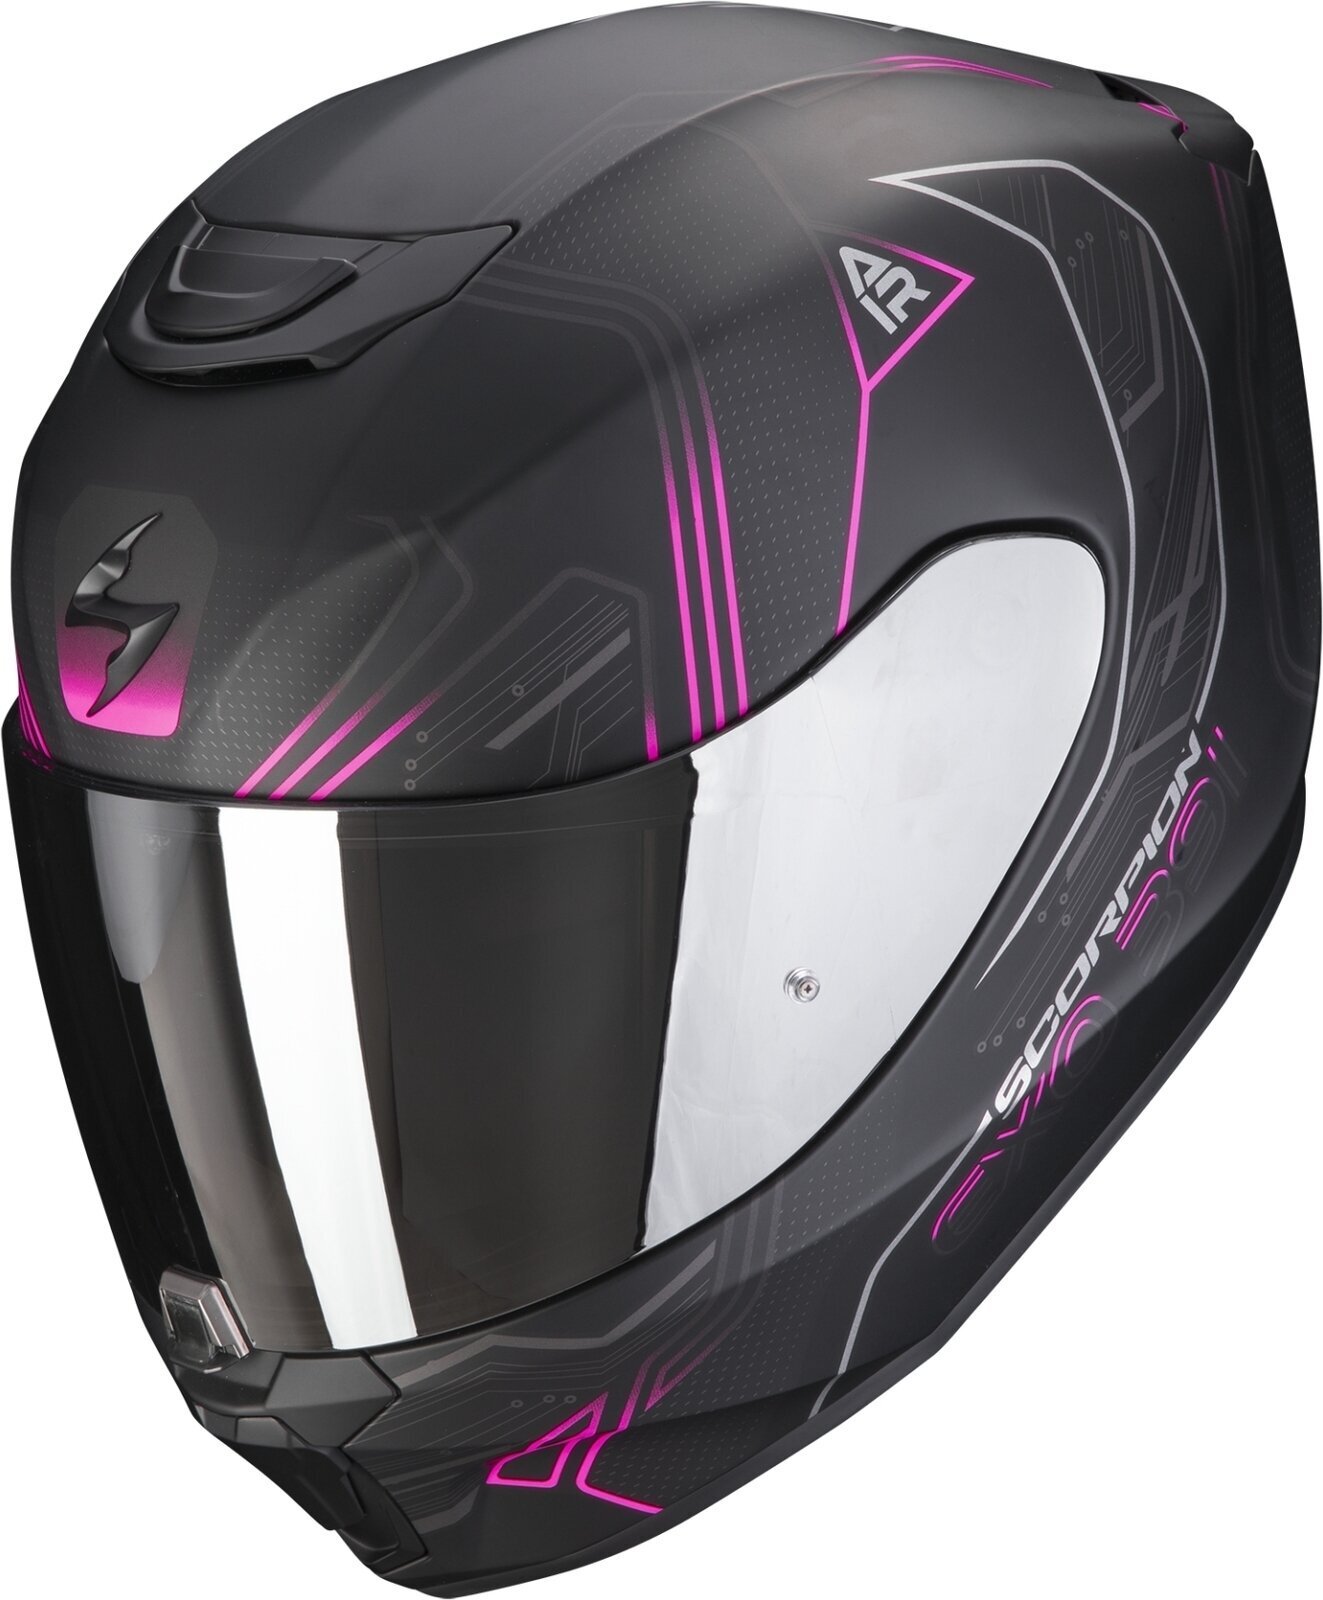 Helm Scorpion EXO 391 SPADA Matt Black/Pink S Helm